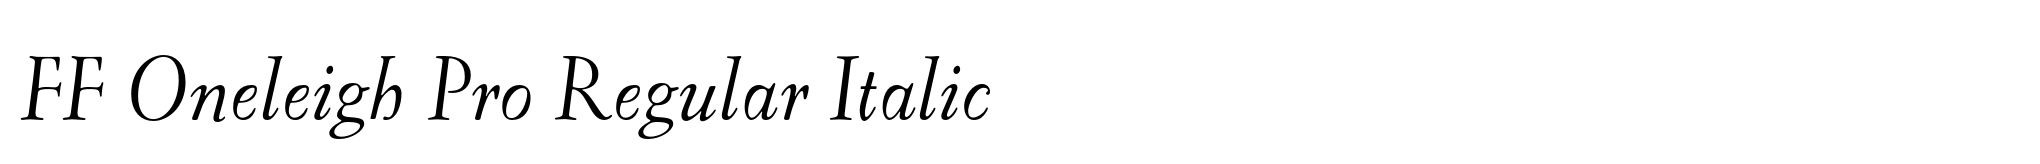 FF Oneleigh Pro Regular Italic image